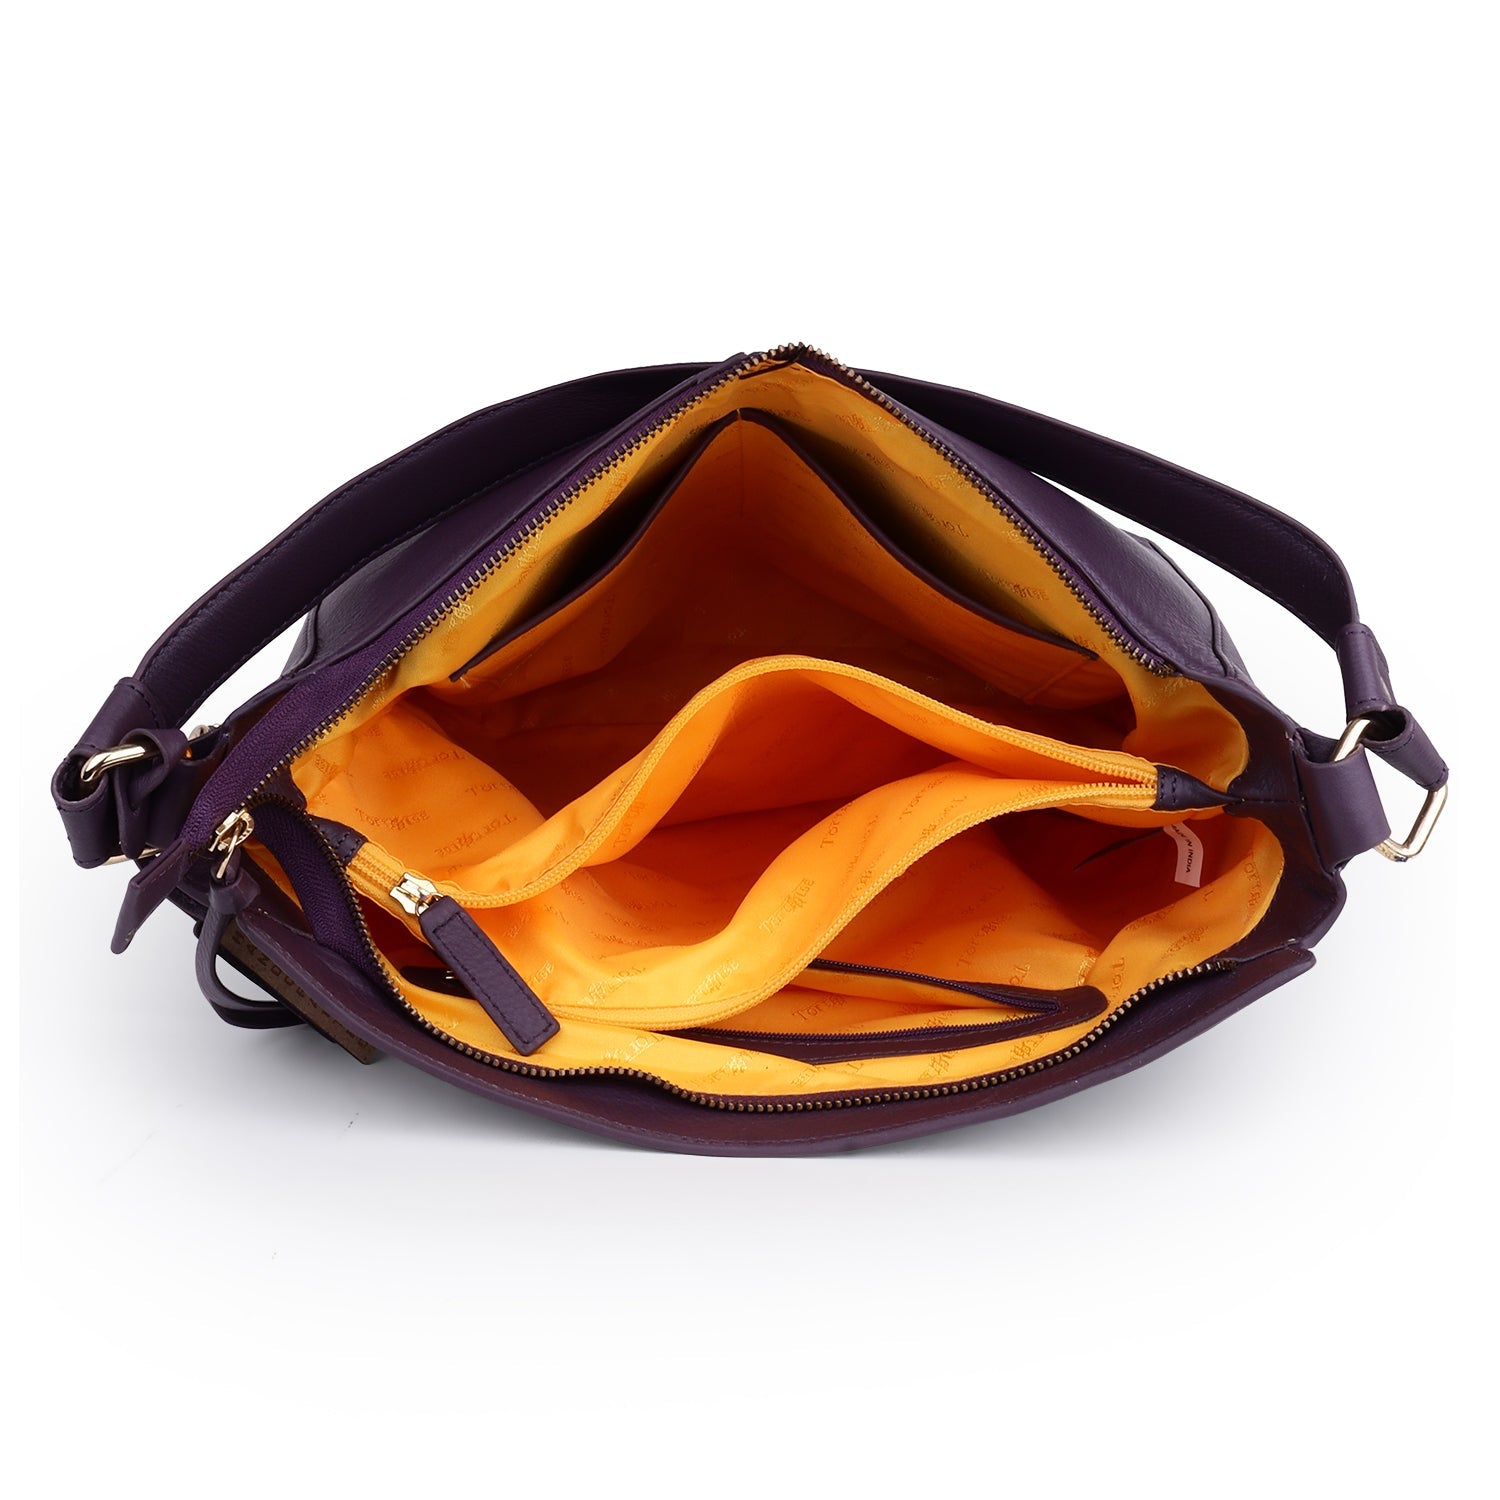 Ivanna - The Handbag/Sling Bag - Purple - Tortoise 